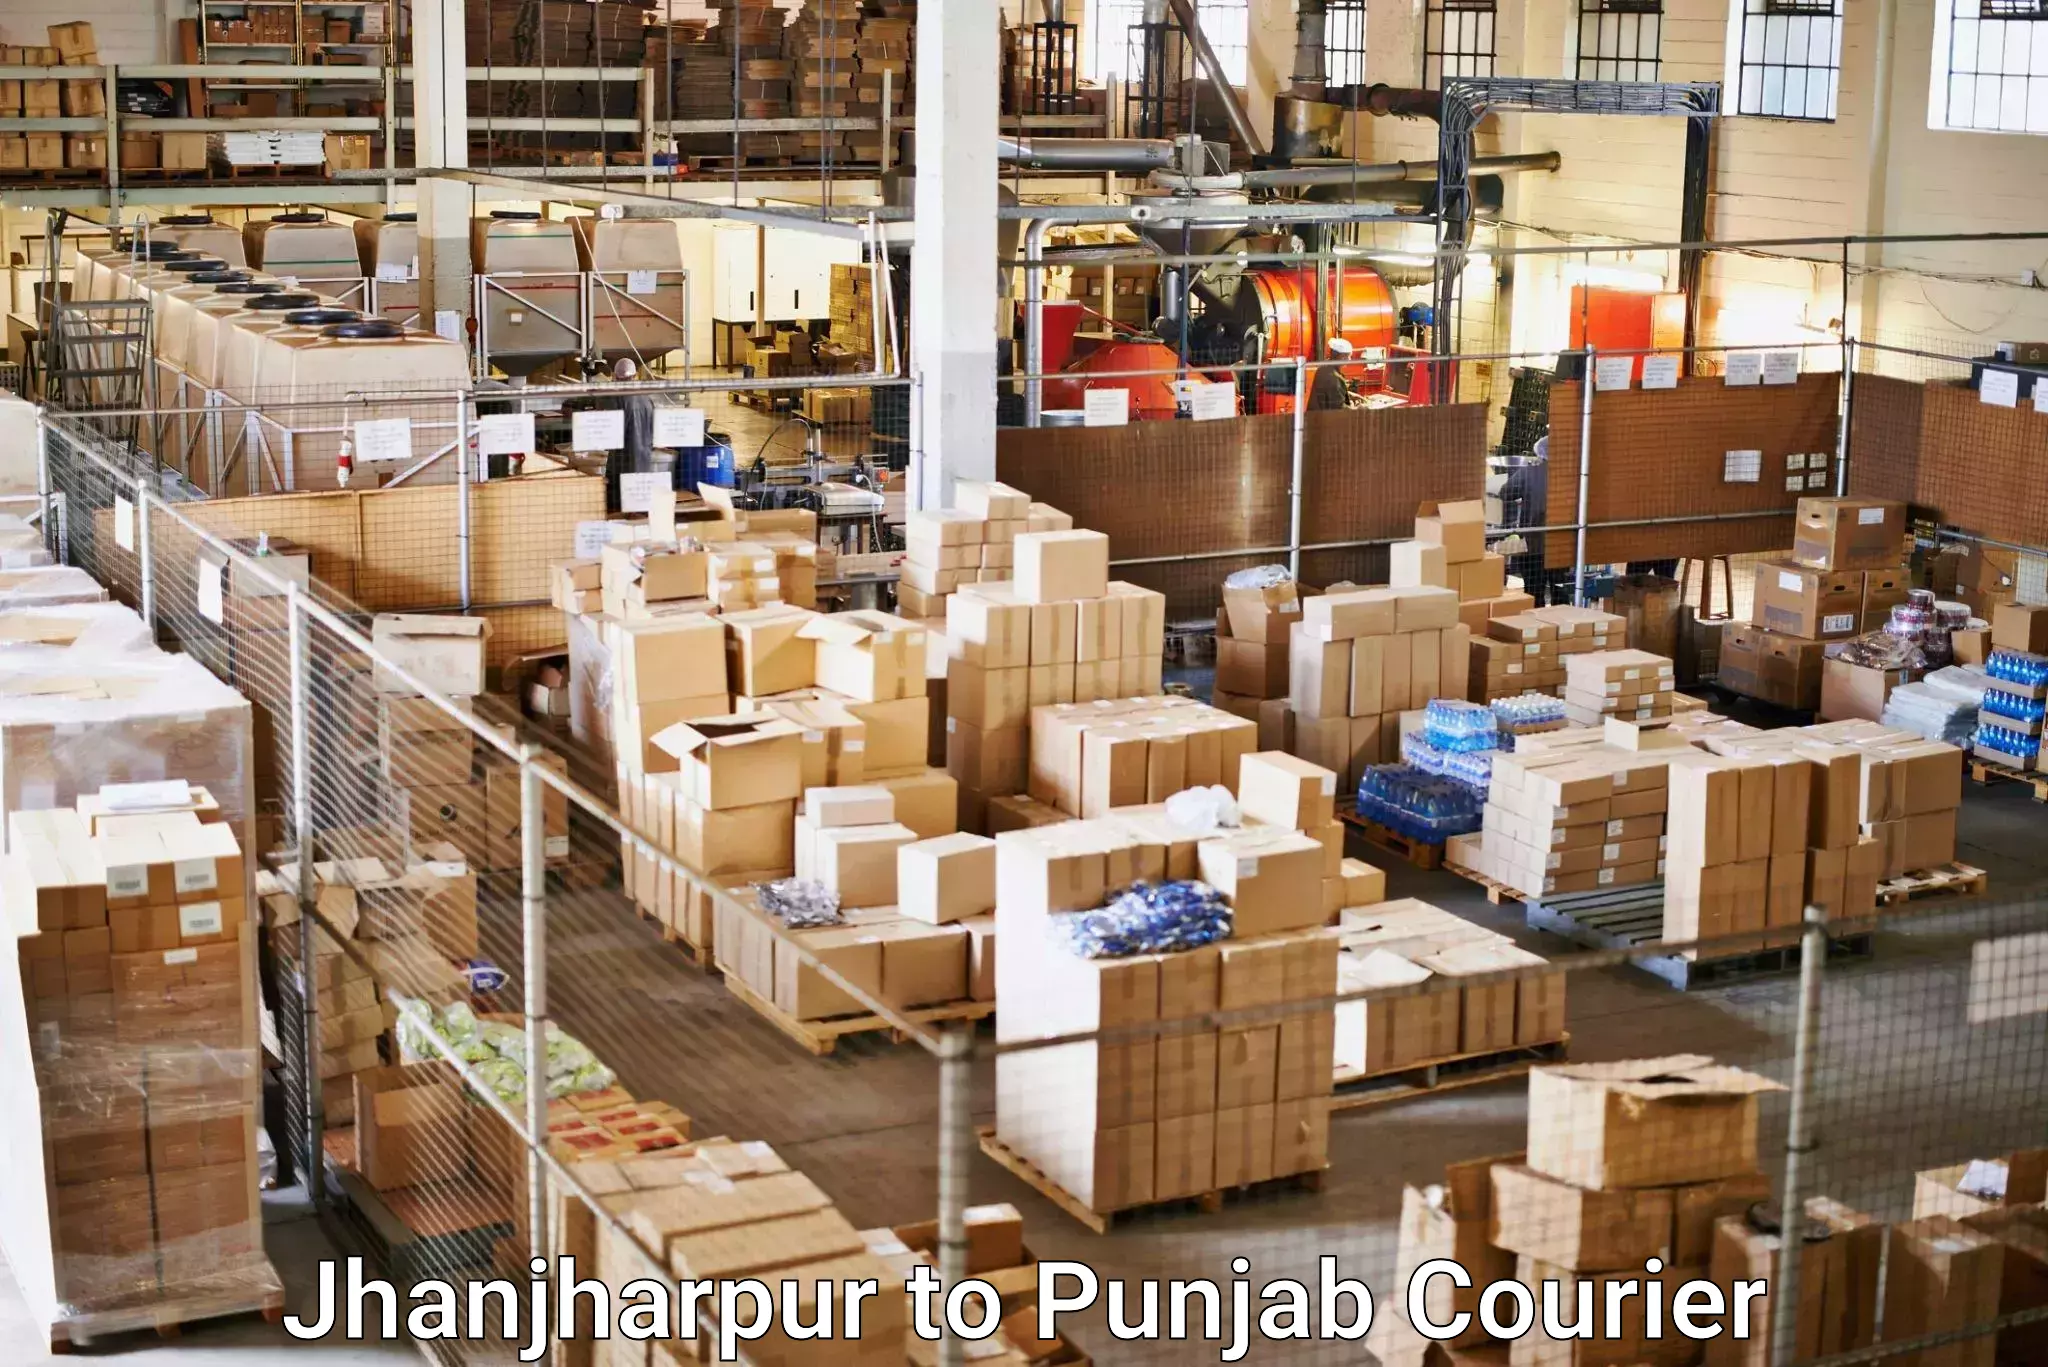 Pharmaceutical courier Jhanjharpur to Ludhiana